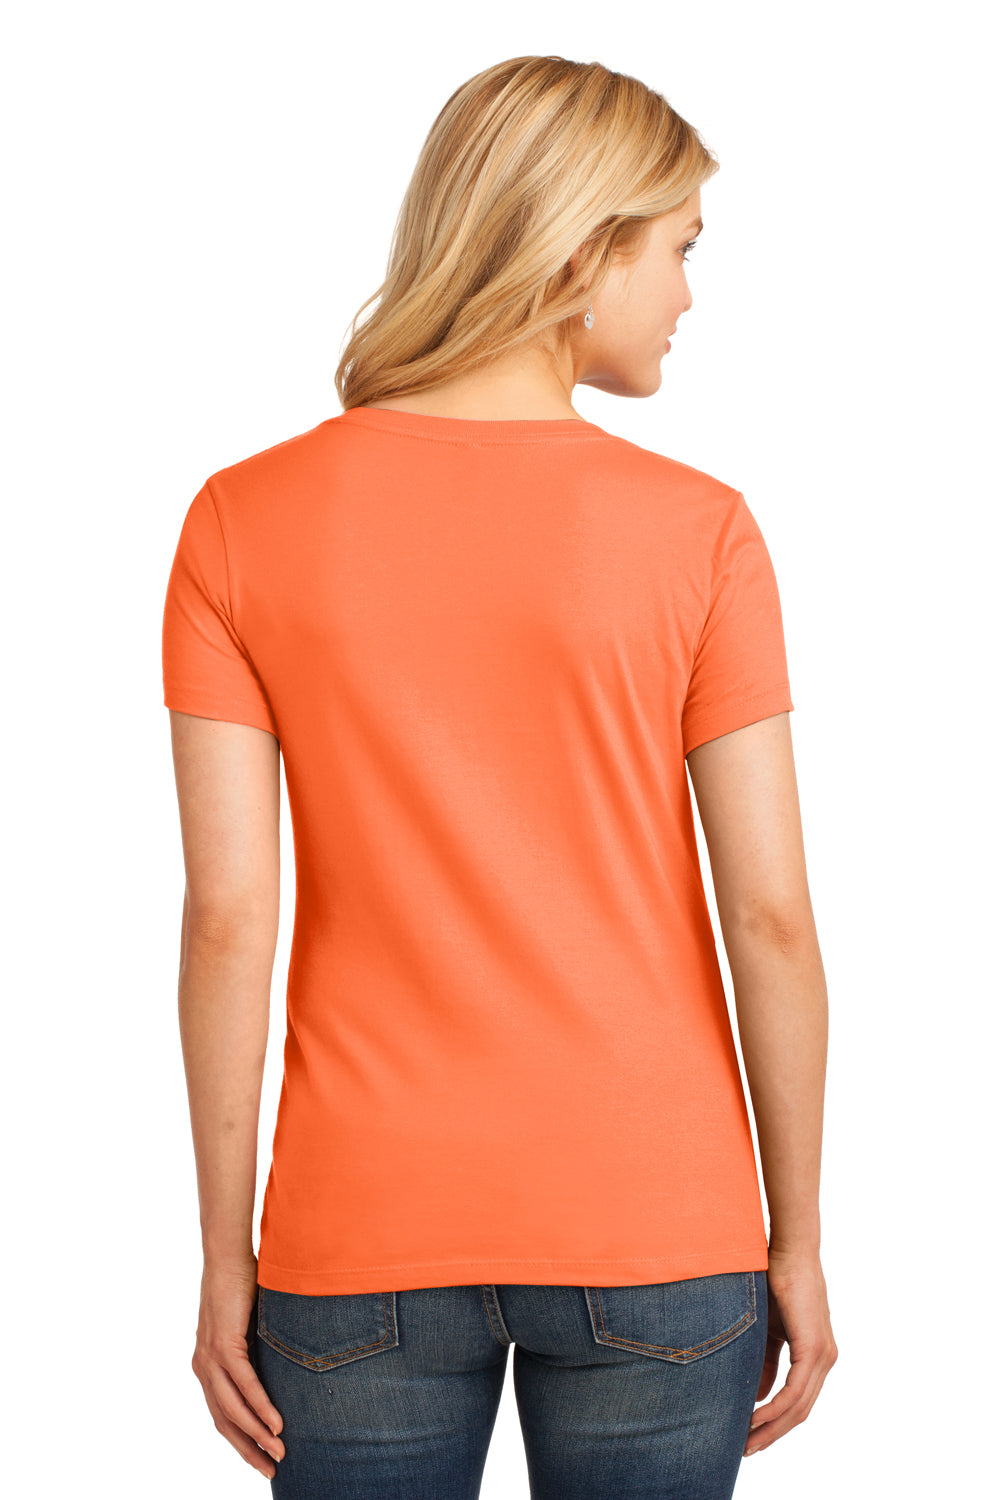 Port & Company LPC54V Womens Core Short Sleeve V-Neck T-Shirt Neon Orange Back